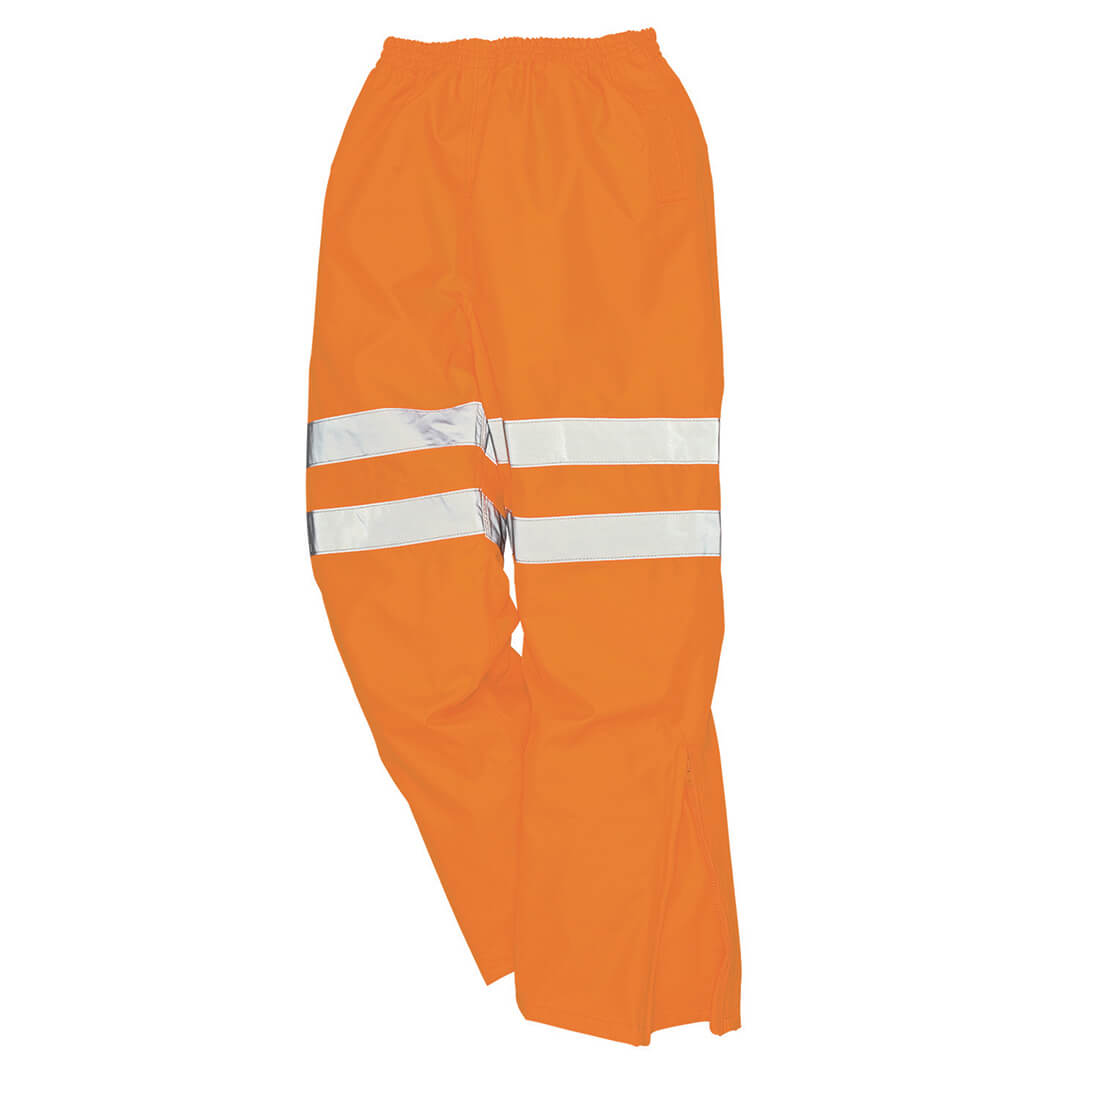 Image of Oxford Weave 300D Class 2 Breathable Hi Vis Breathable Trousers Orange 3XL